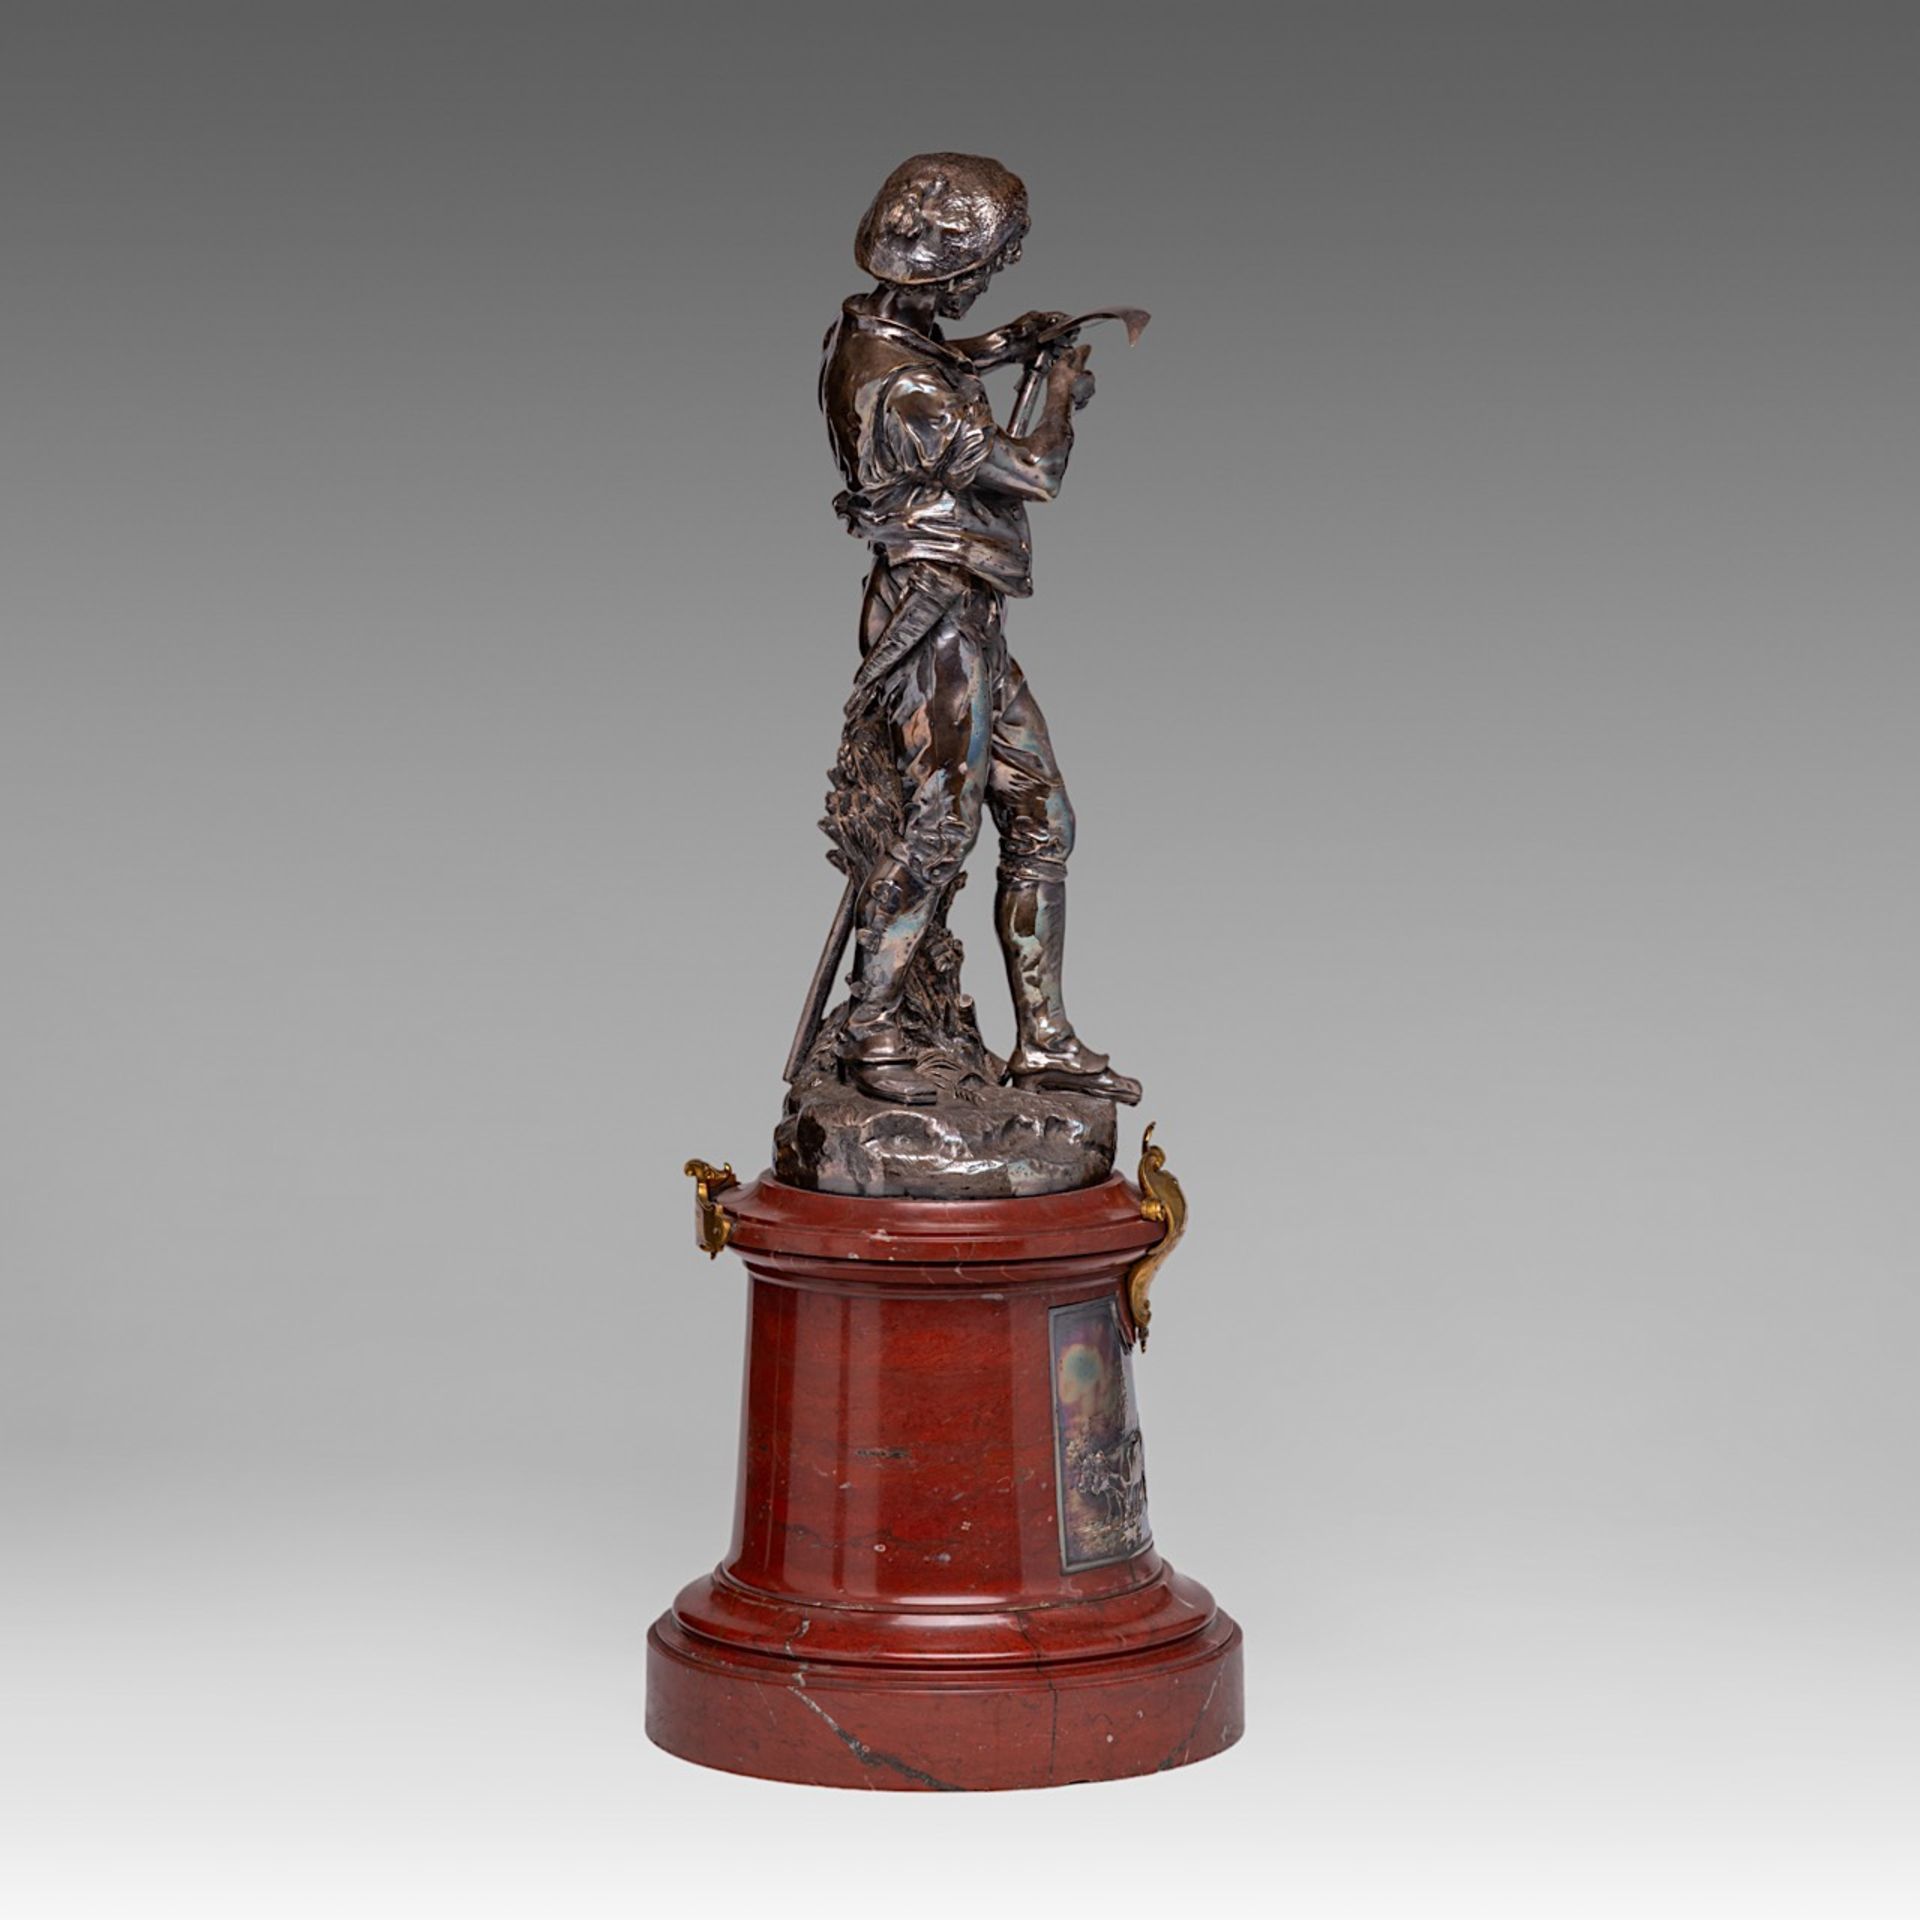 A silver-plated bronze sculpture of 'Le Faucheur', cast by Christofle & Cie, 1885, H 63 cm - Image 4 of 7